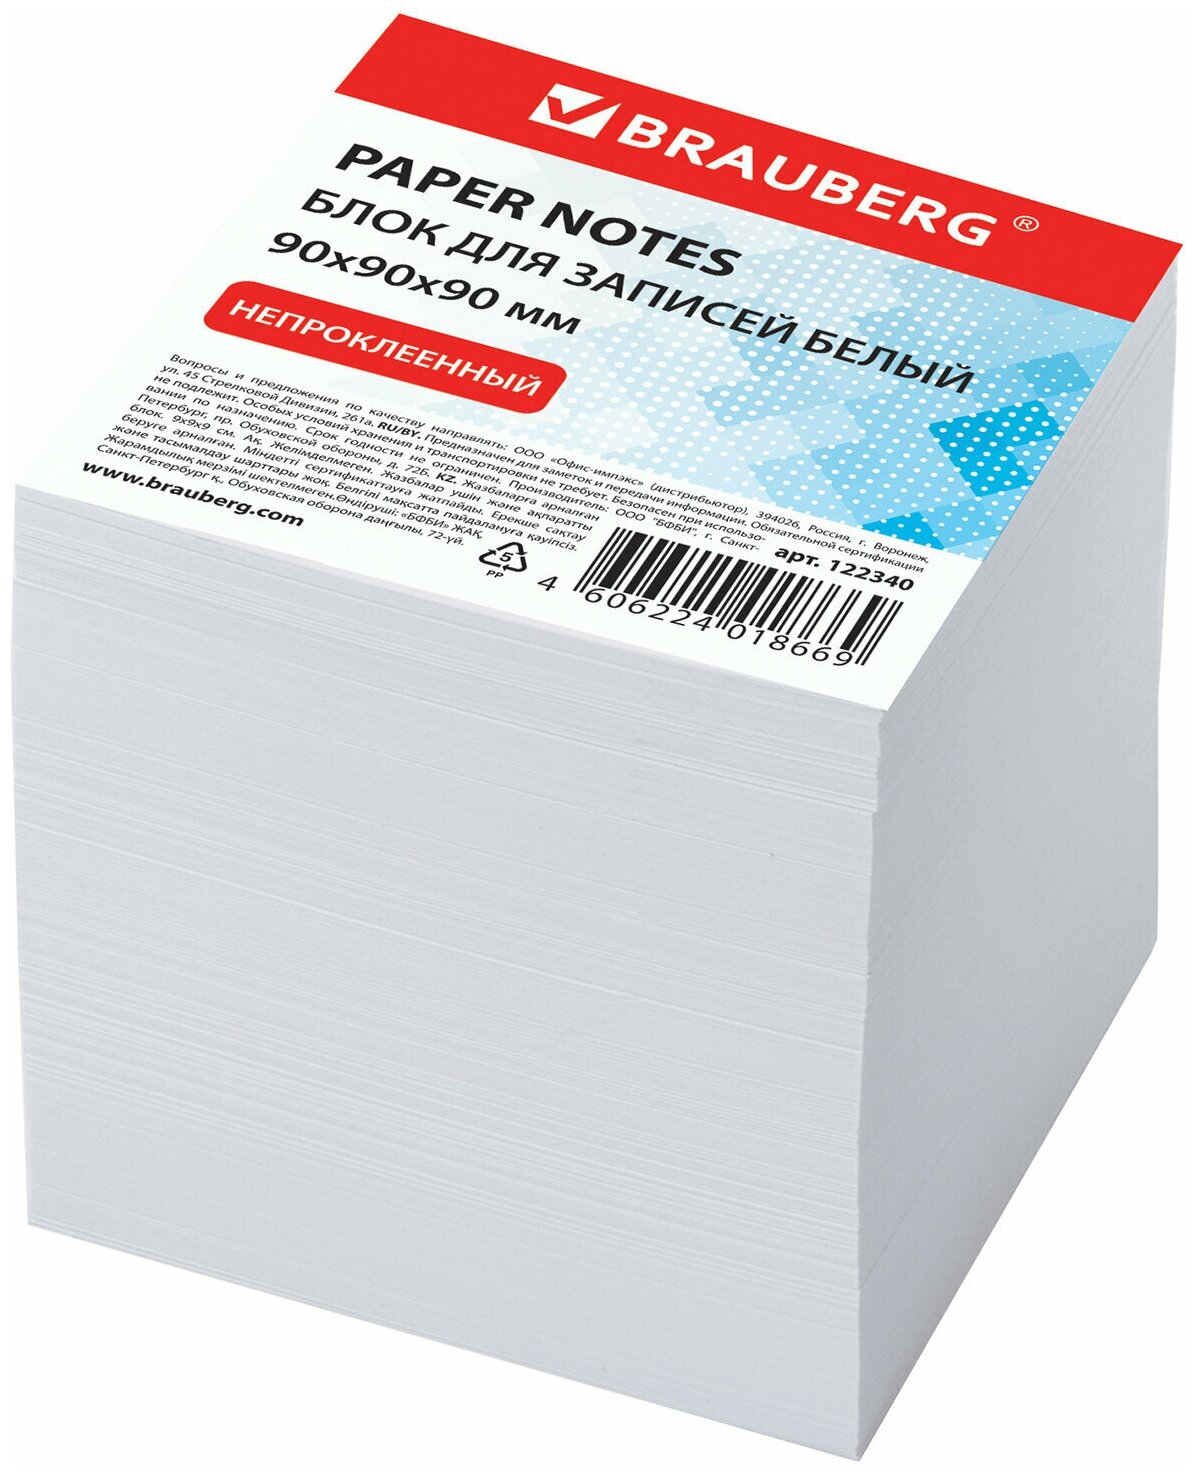 Блок для записей BRAUBERG, непроклеенный, куб 9х9х9 см, белый, белизна 95-98%, 122340 - 2 шт.